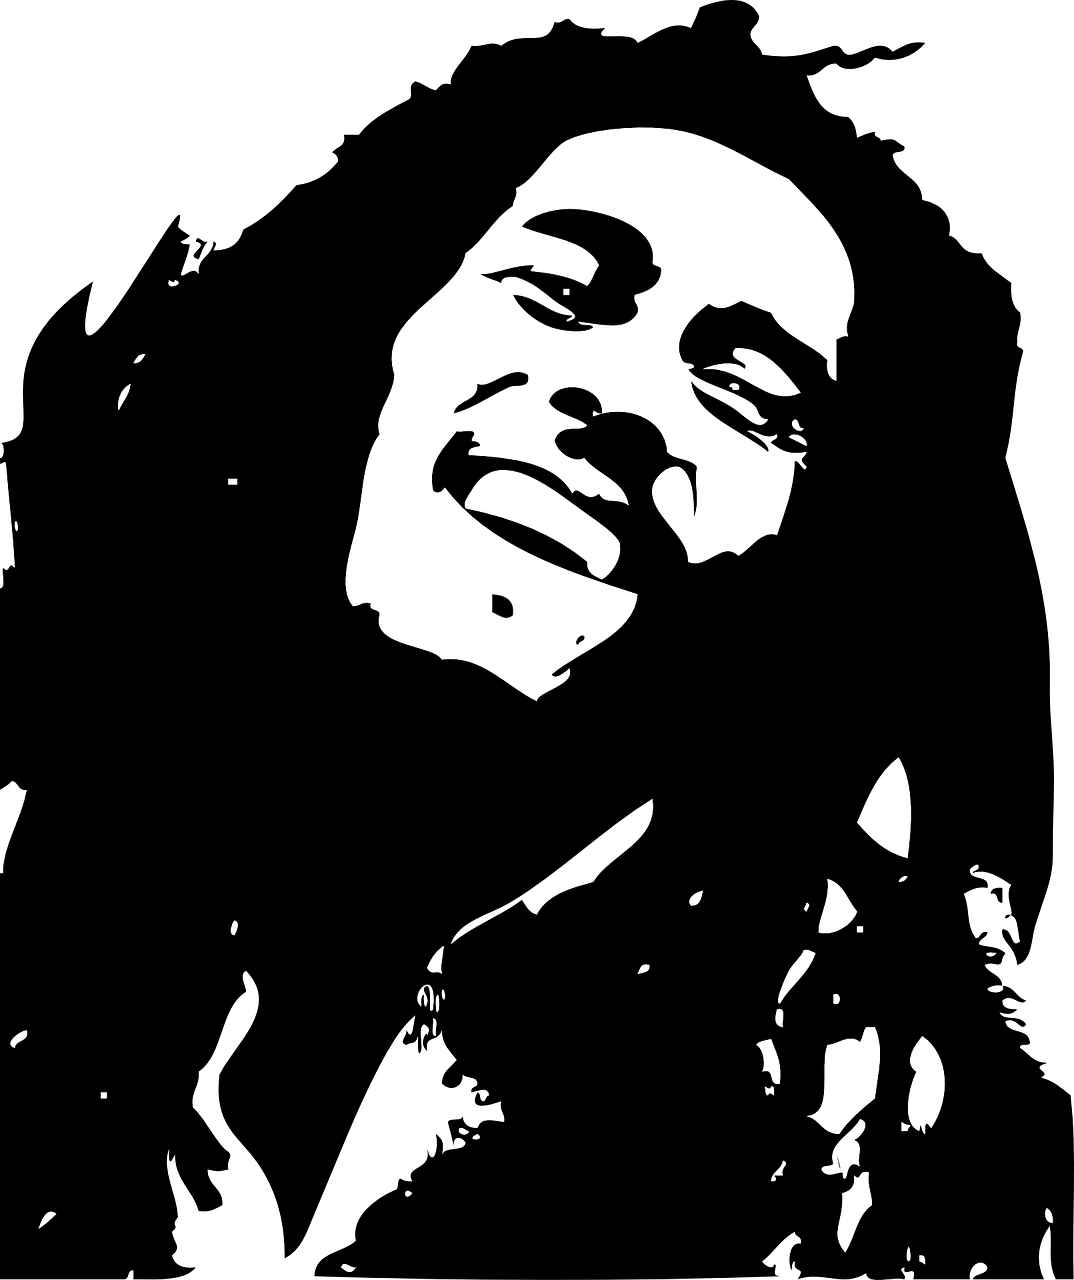 Bob Marley PNG Image - PurePNG | Free transparent CC0 PNG Image Library